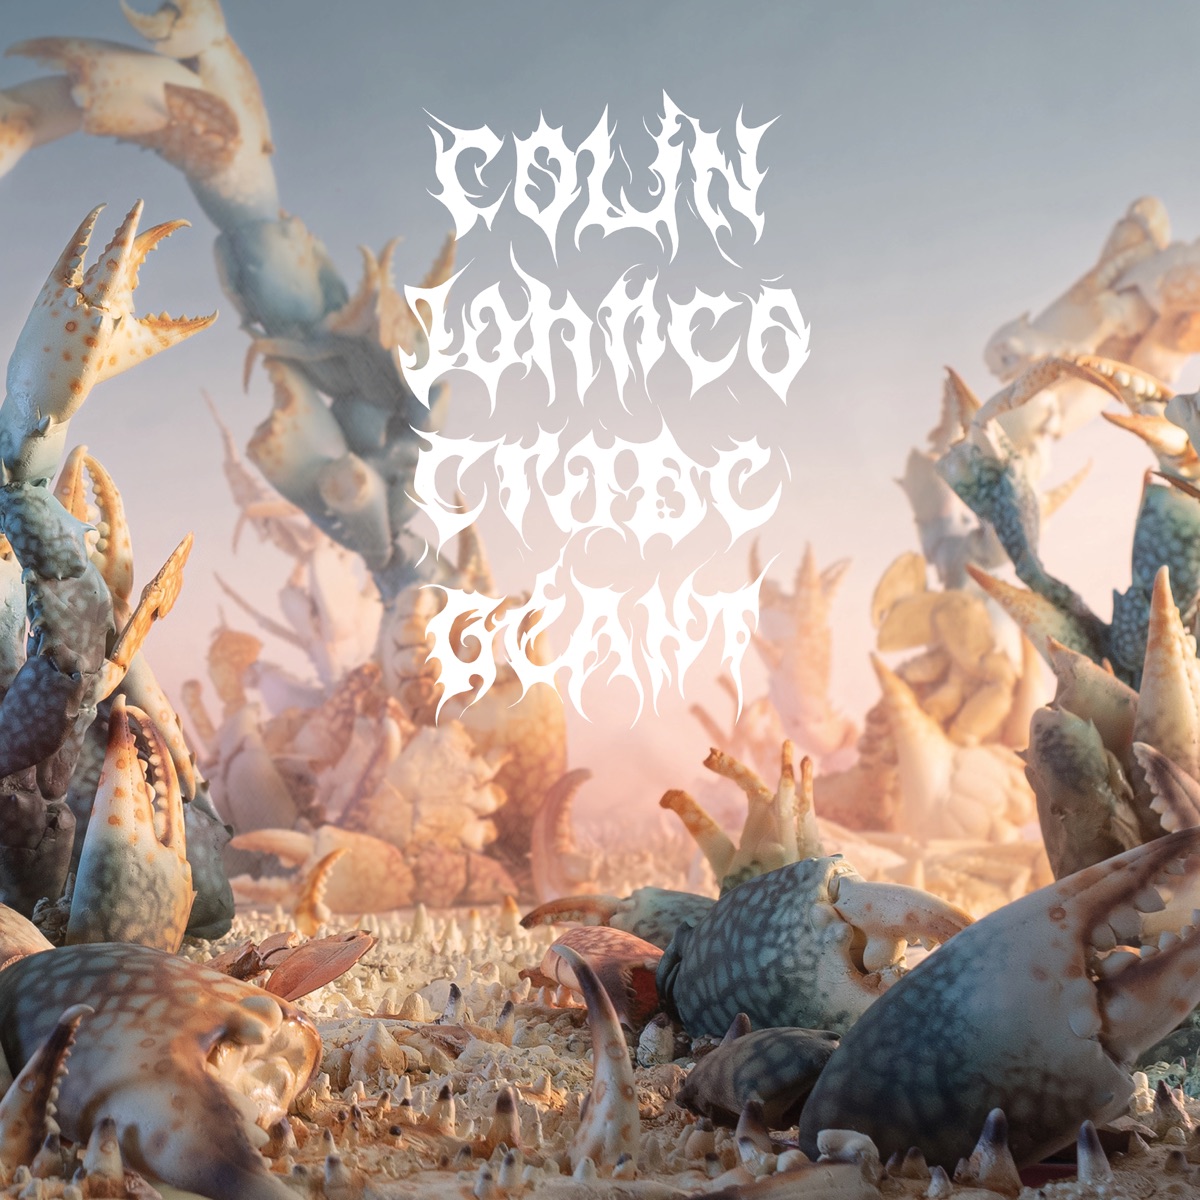 Crabe géant - Album by Colin Johnco - Apple Music